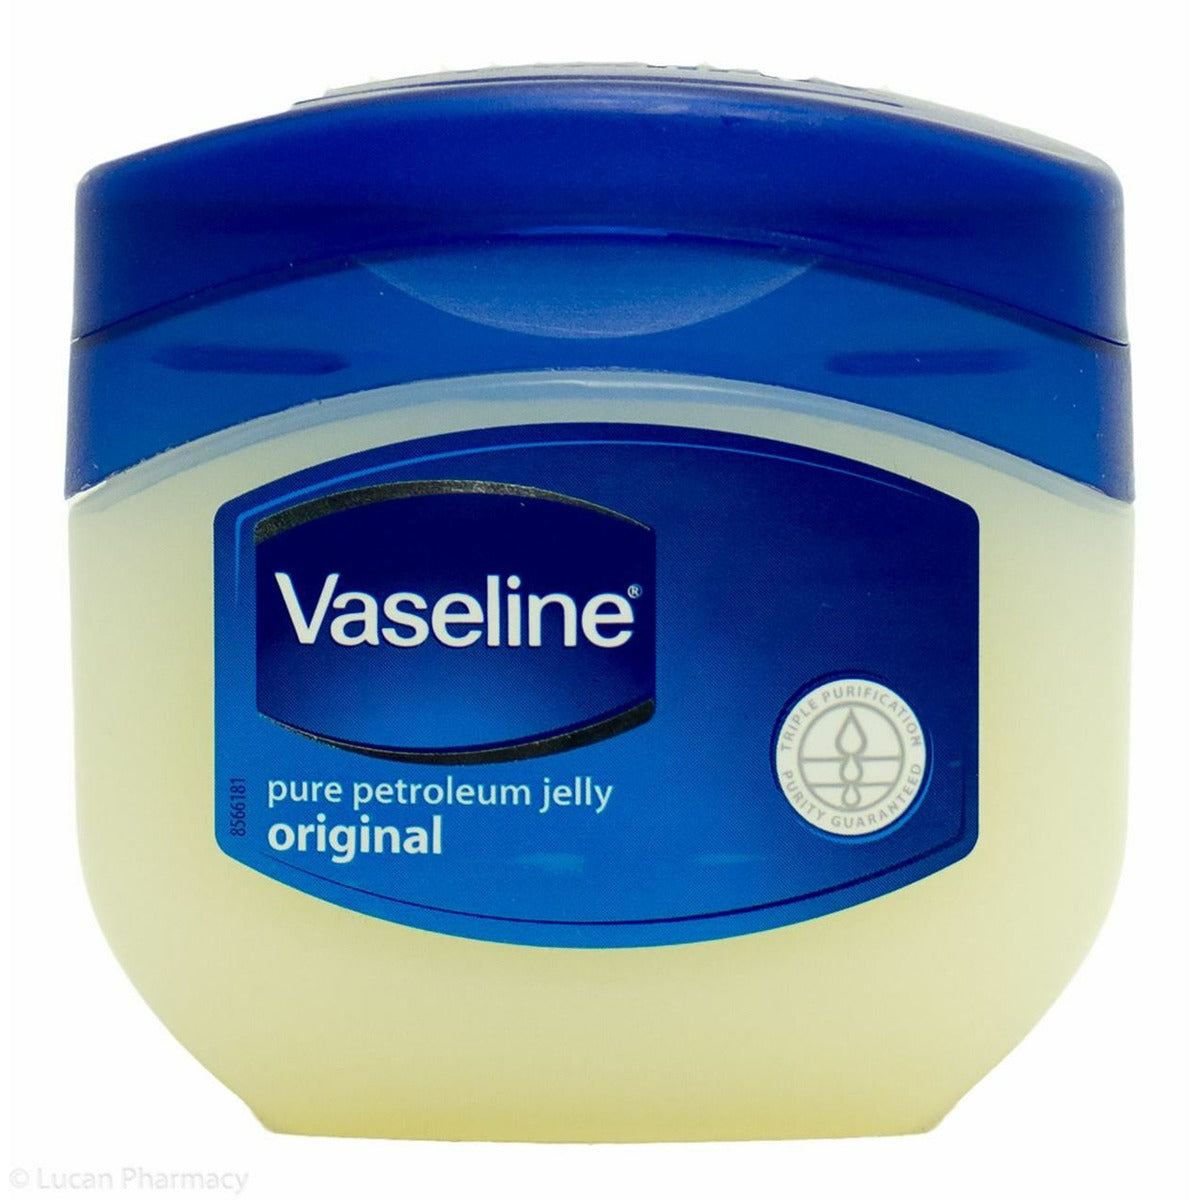 Vaseline - Original Pure Petroleum Jelly - 100ml - Continental Food Store